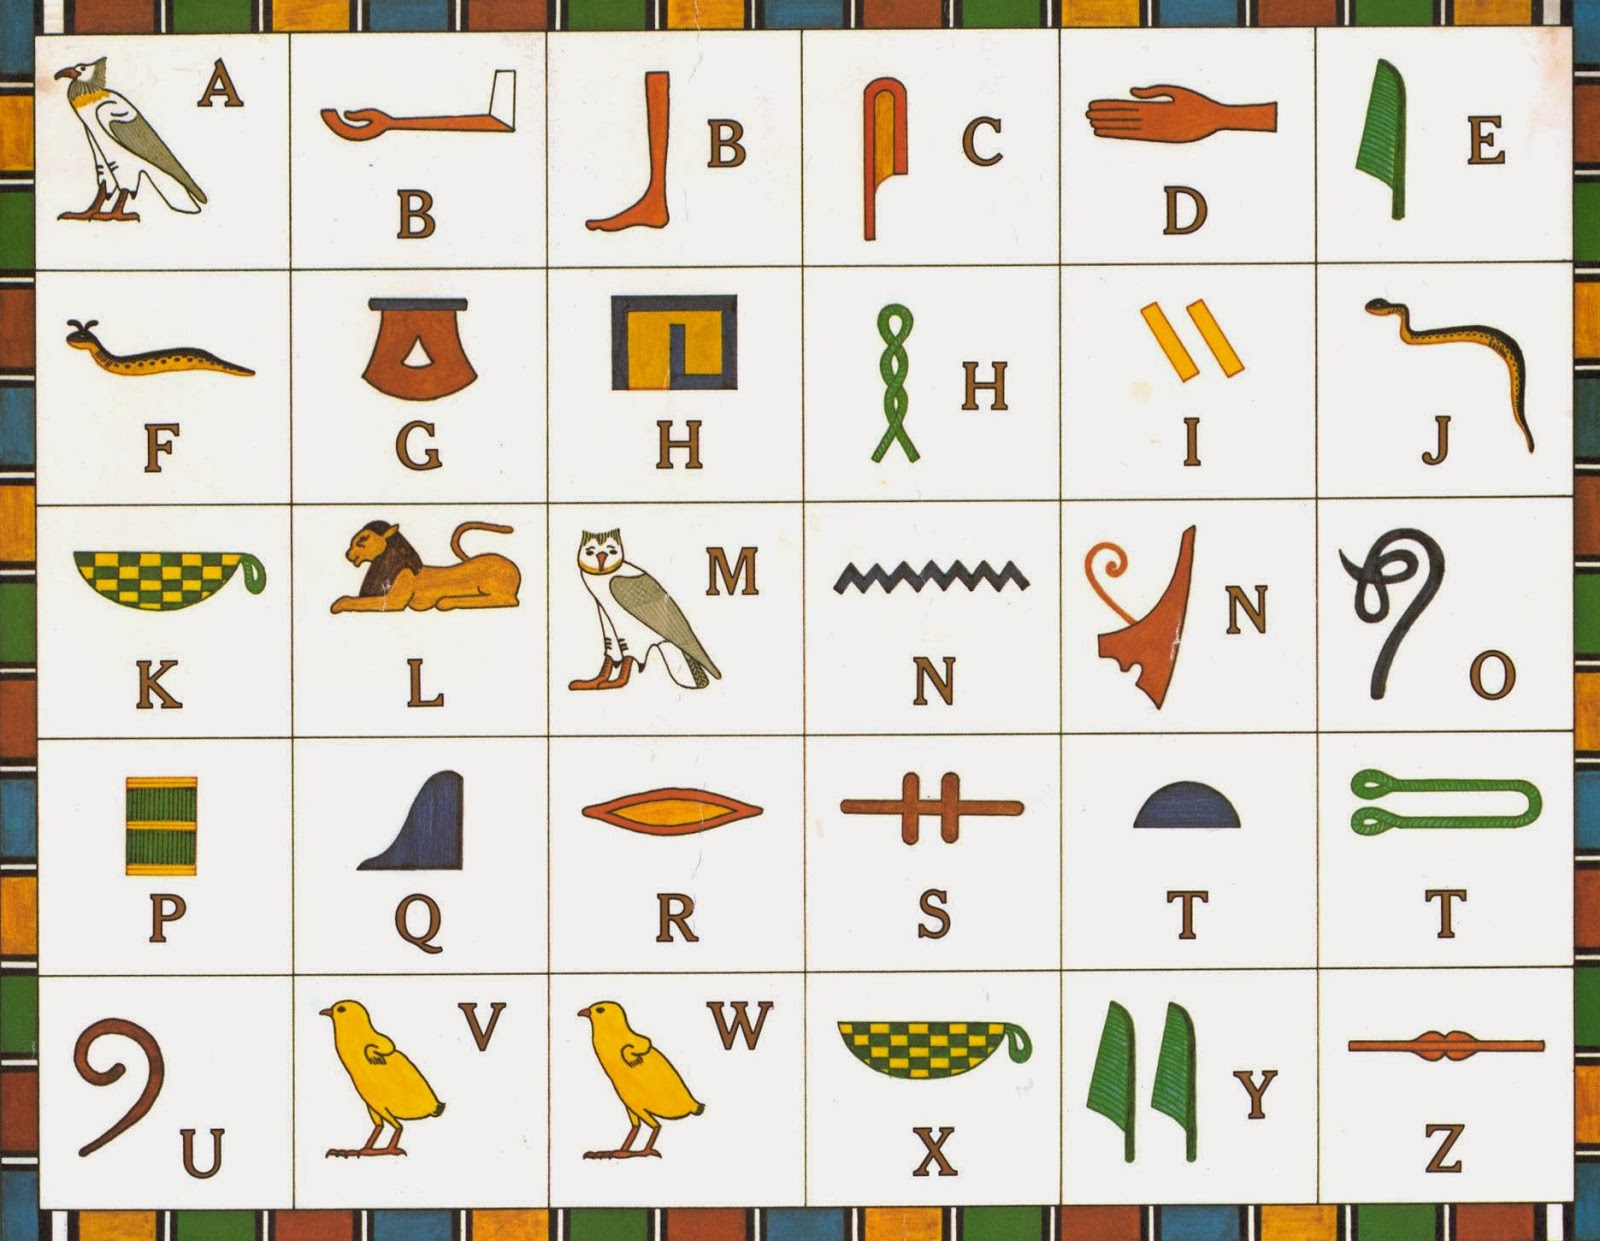 hieroglyphs_symbols.jpg